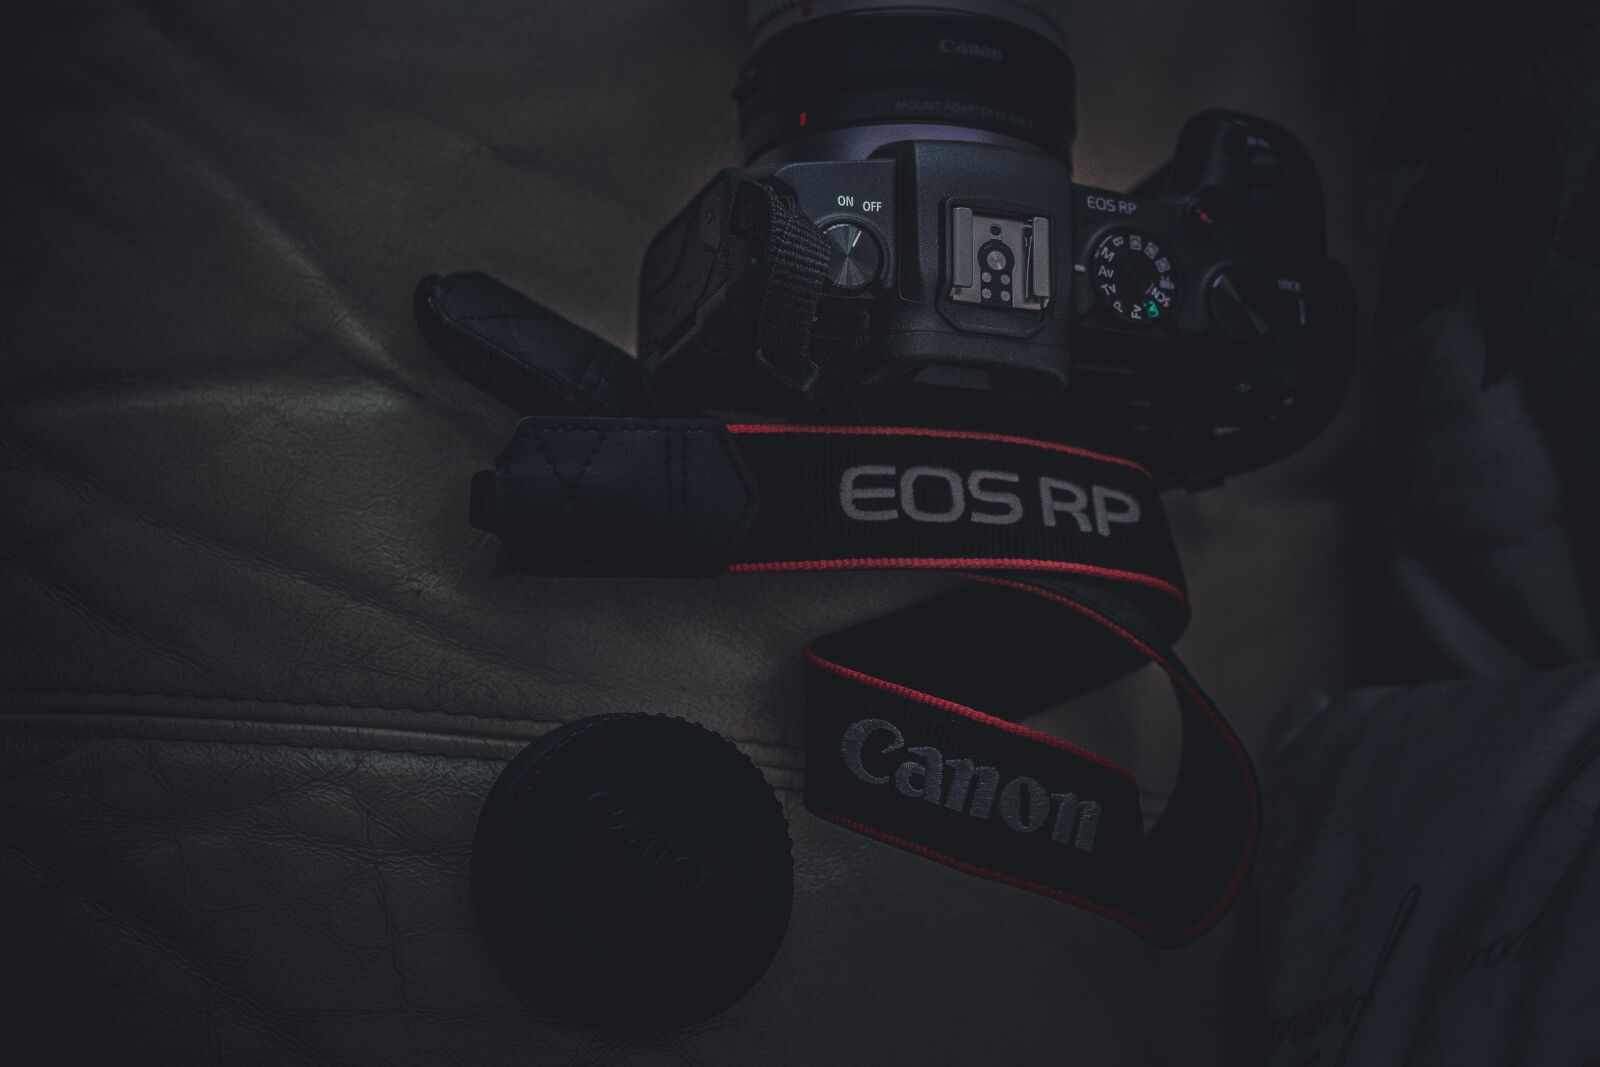 Canon EOS 700D (EOS Rebel T5i / EOS Kiss X7i) sample photo